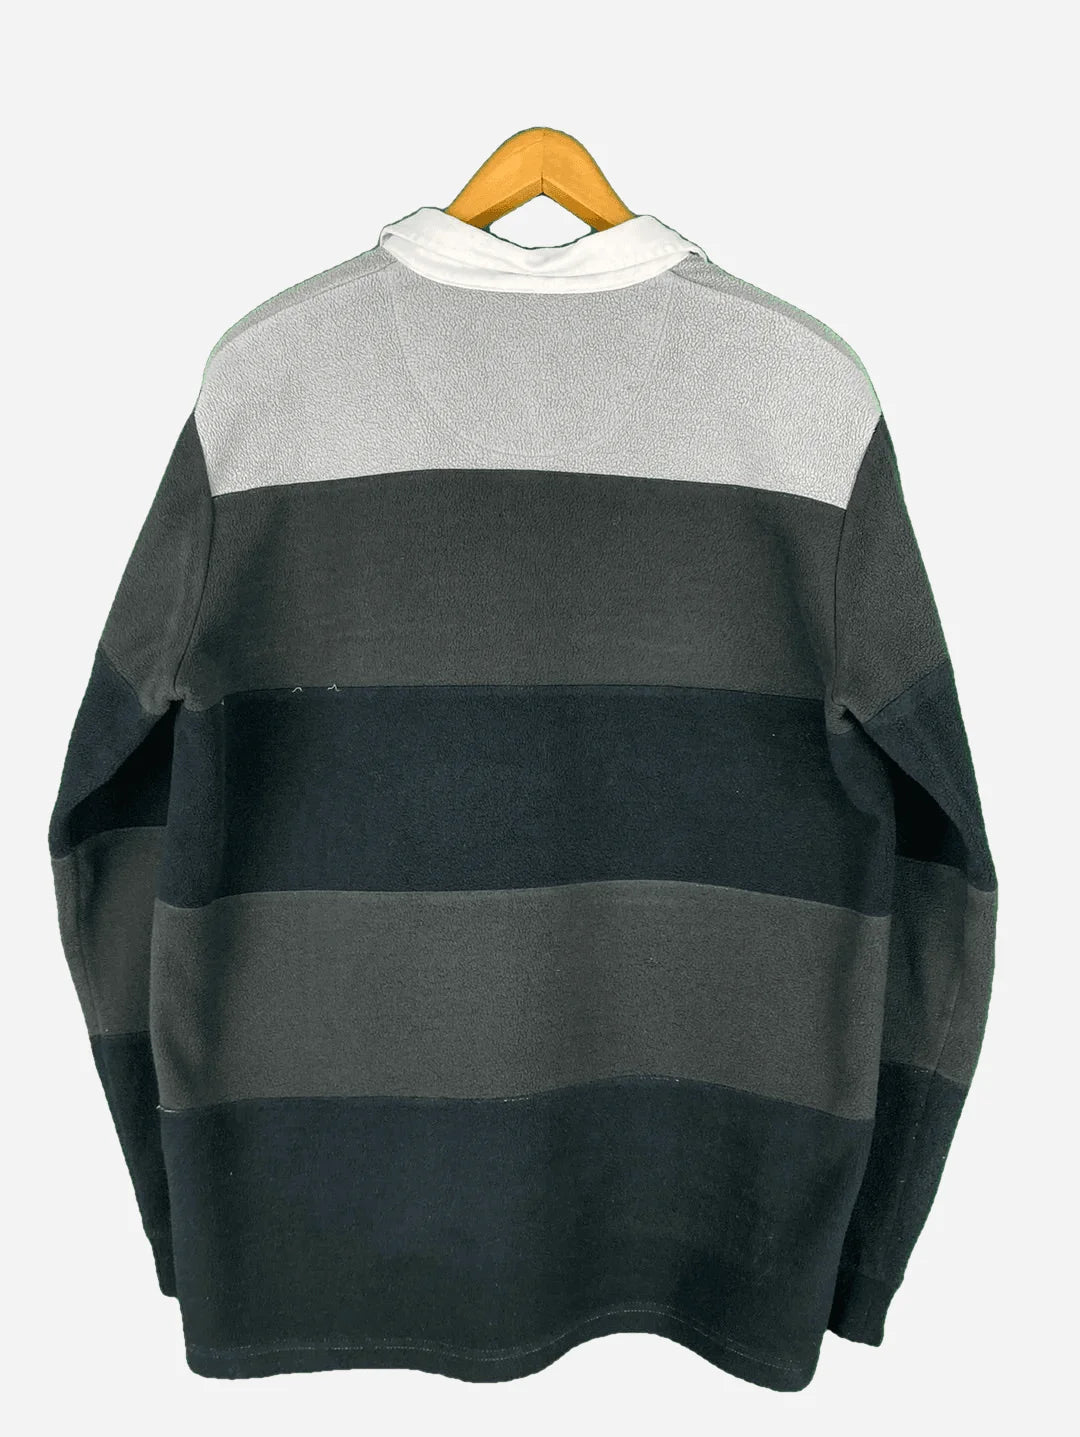 Guinness Fleece Sweater (L)